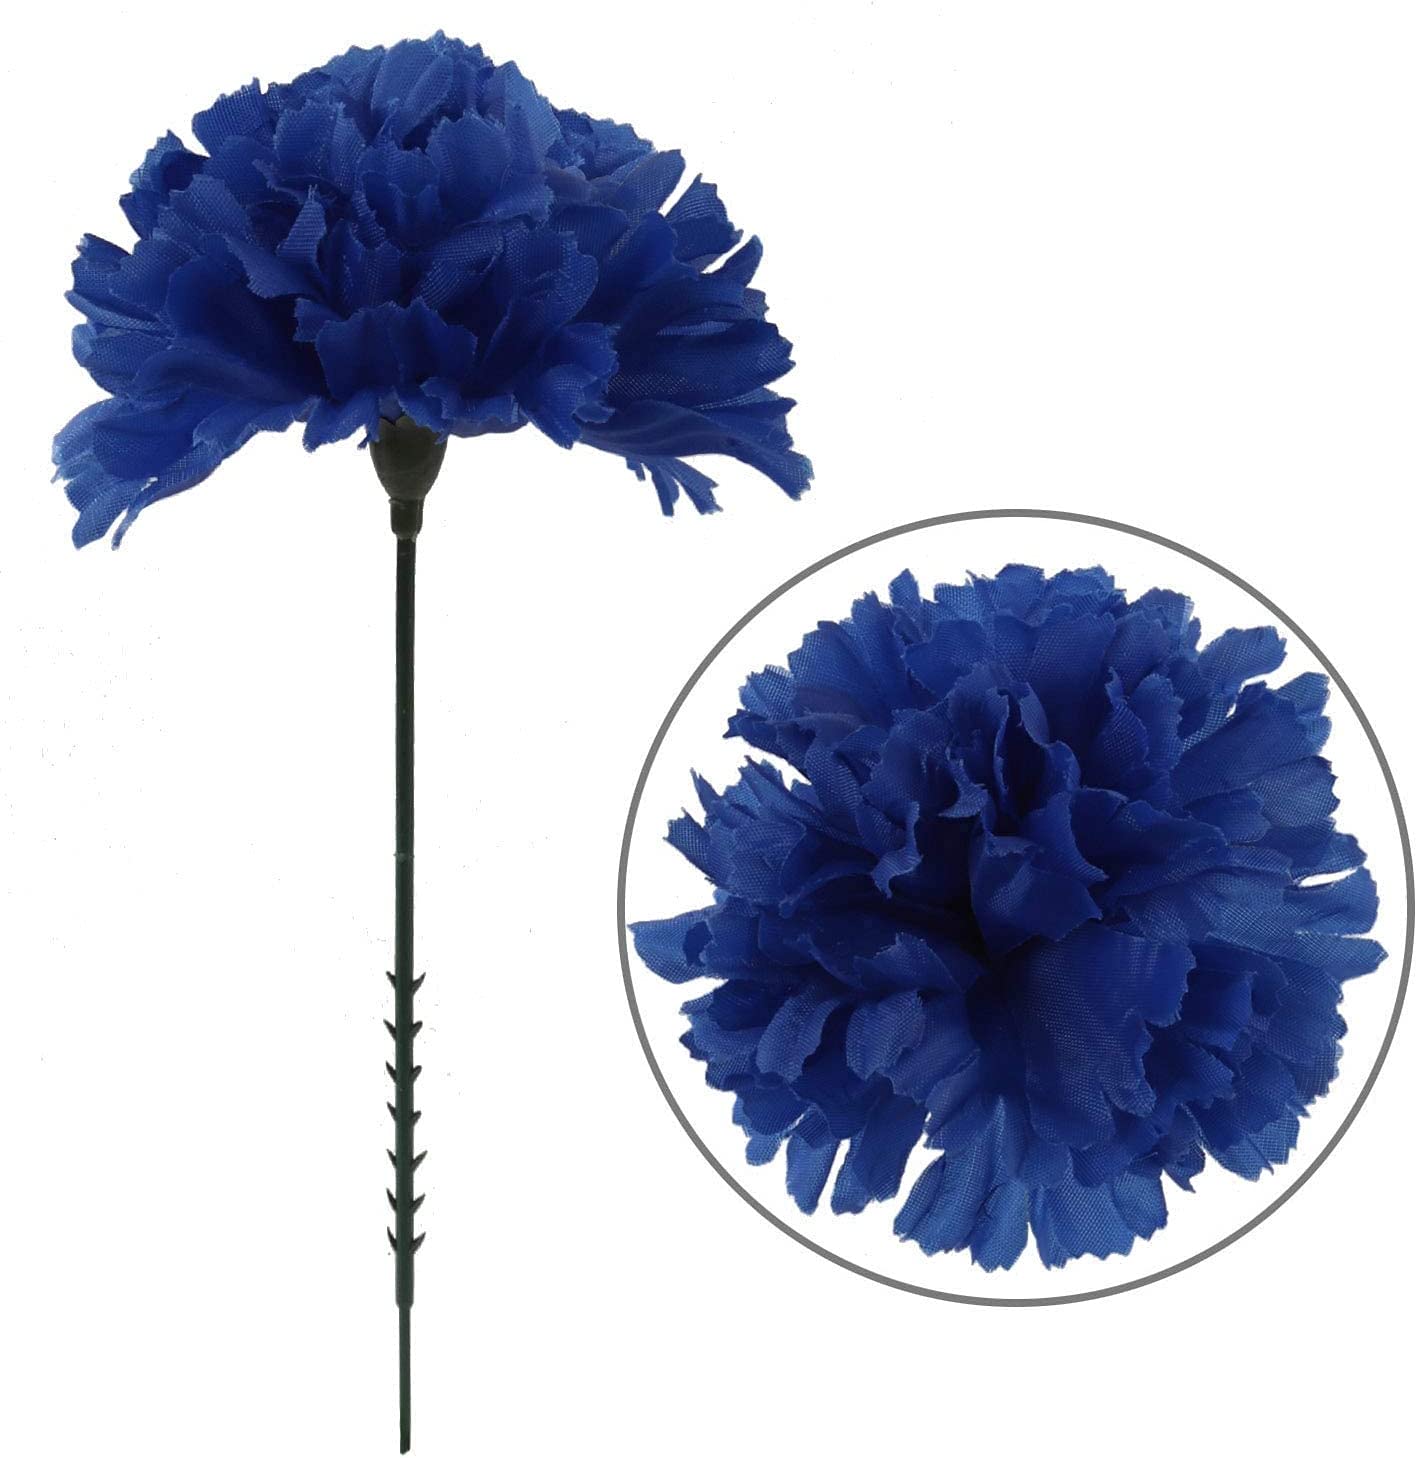 Regal Royal Blue Carnation Flowers, 100-Pack: Lifelike Artificial Carnation Picks for Majestic Floral Arrangements, Weddings, and Home Decor